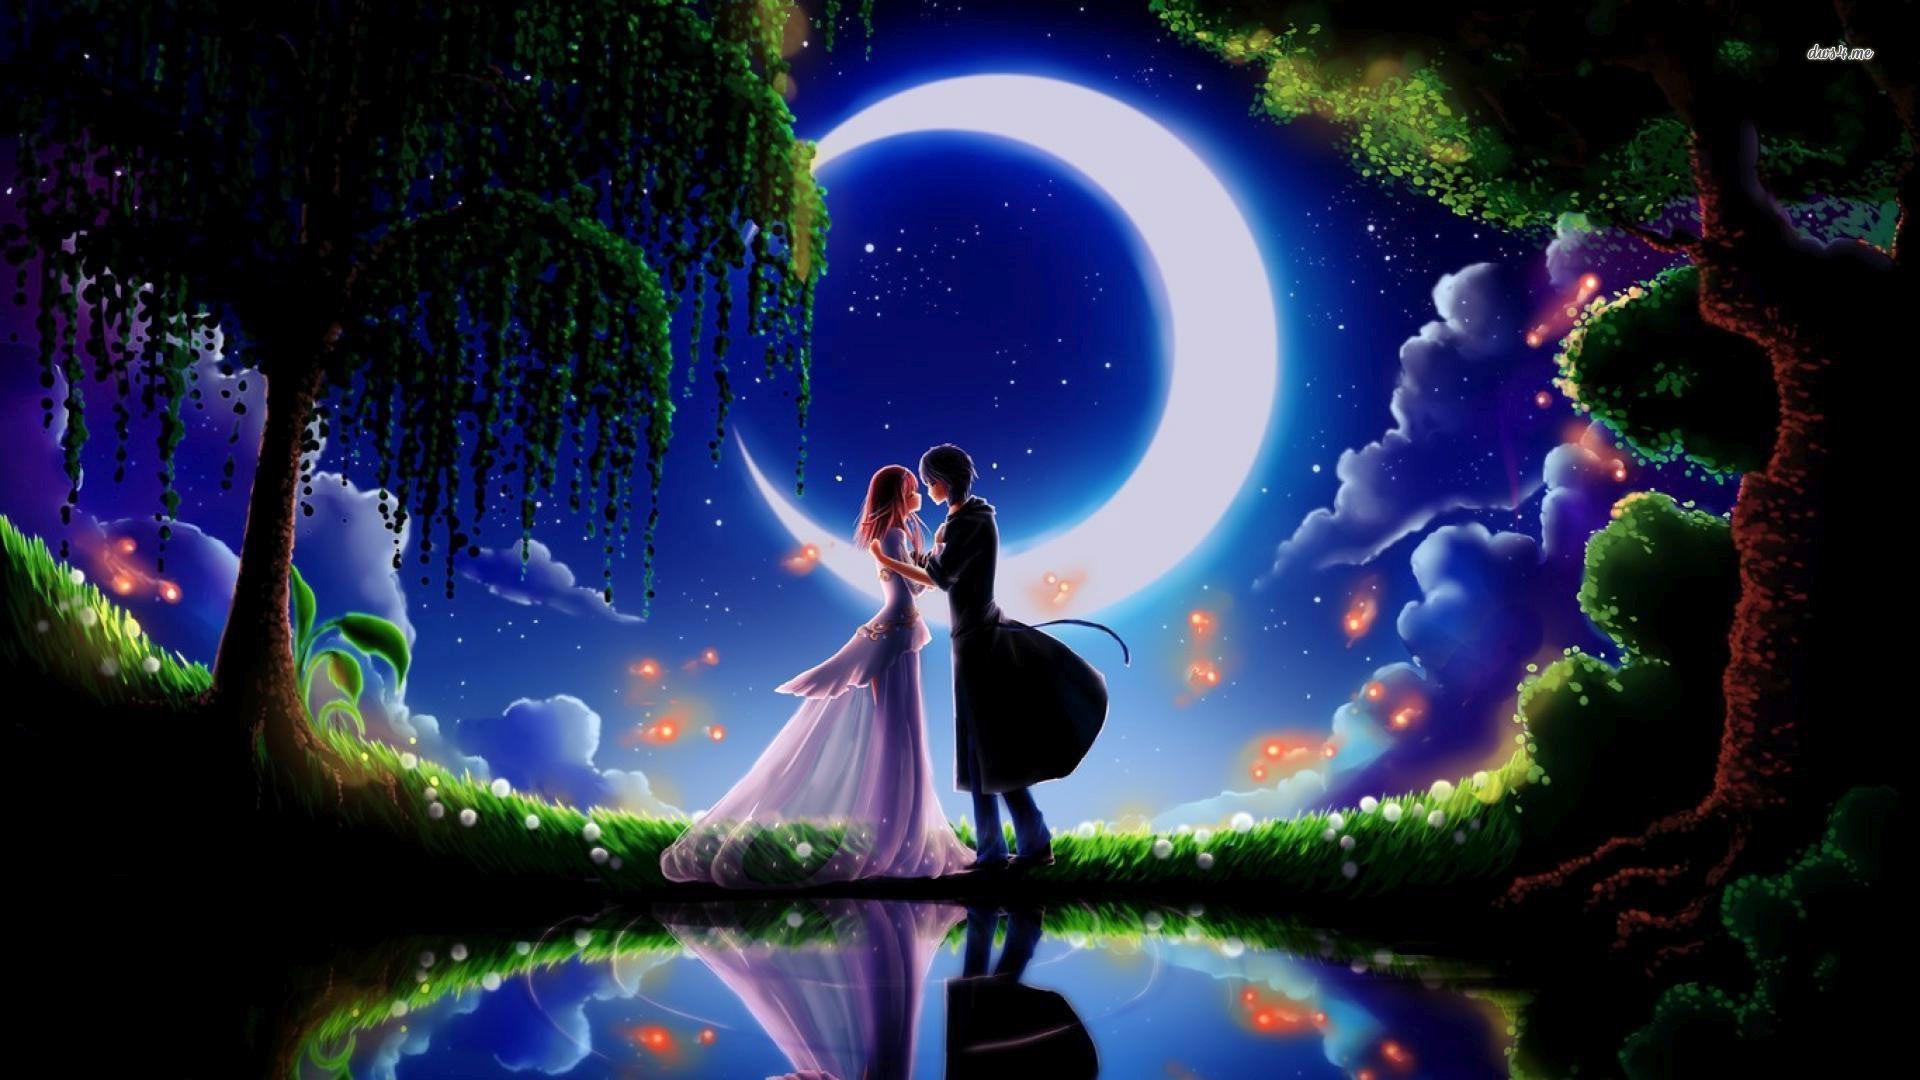 Moonlight kiss wallpaper wallpaper